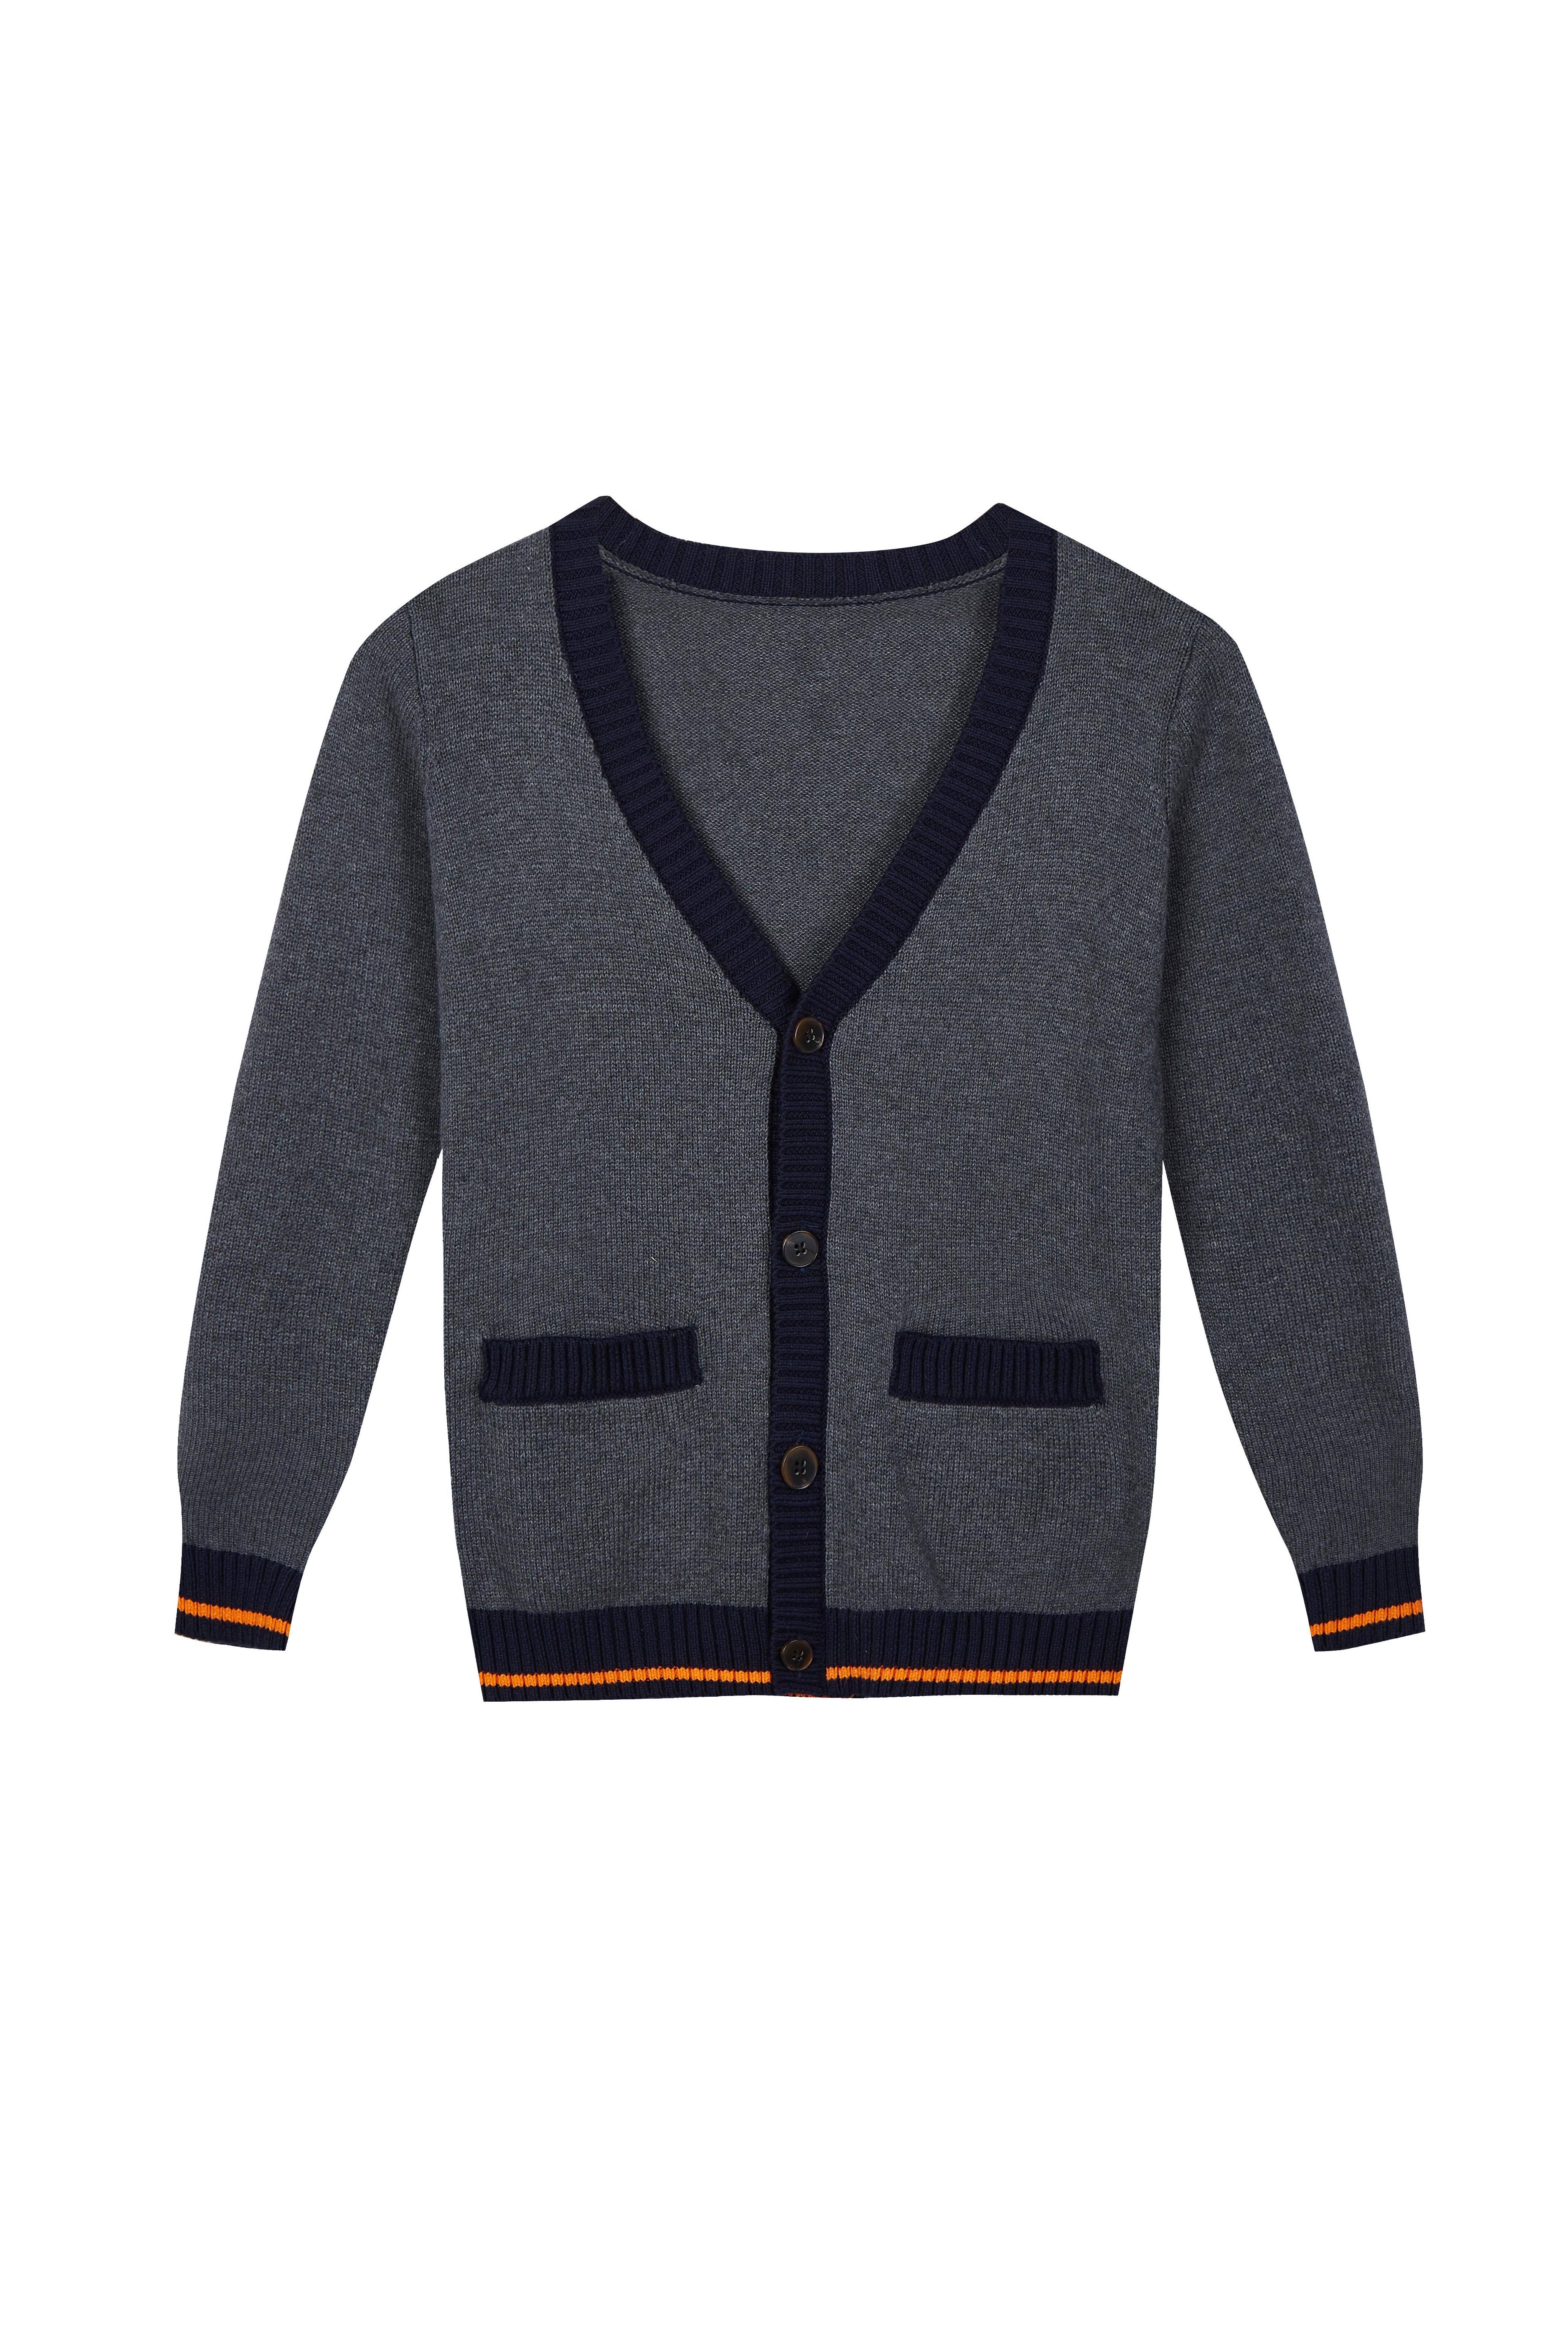 Kids's Sweater Vest Cotton V-Neck School Uniform Cardigan